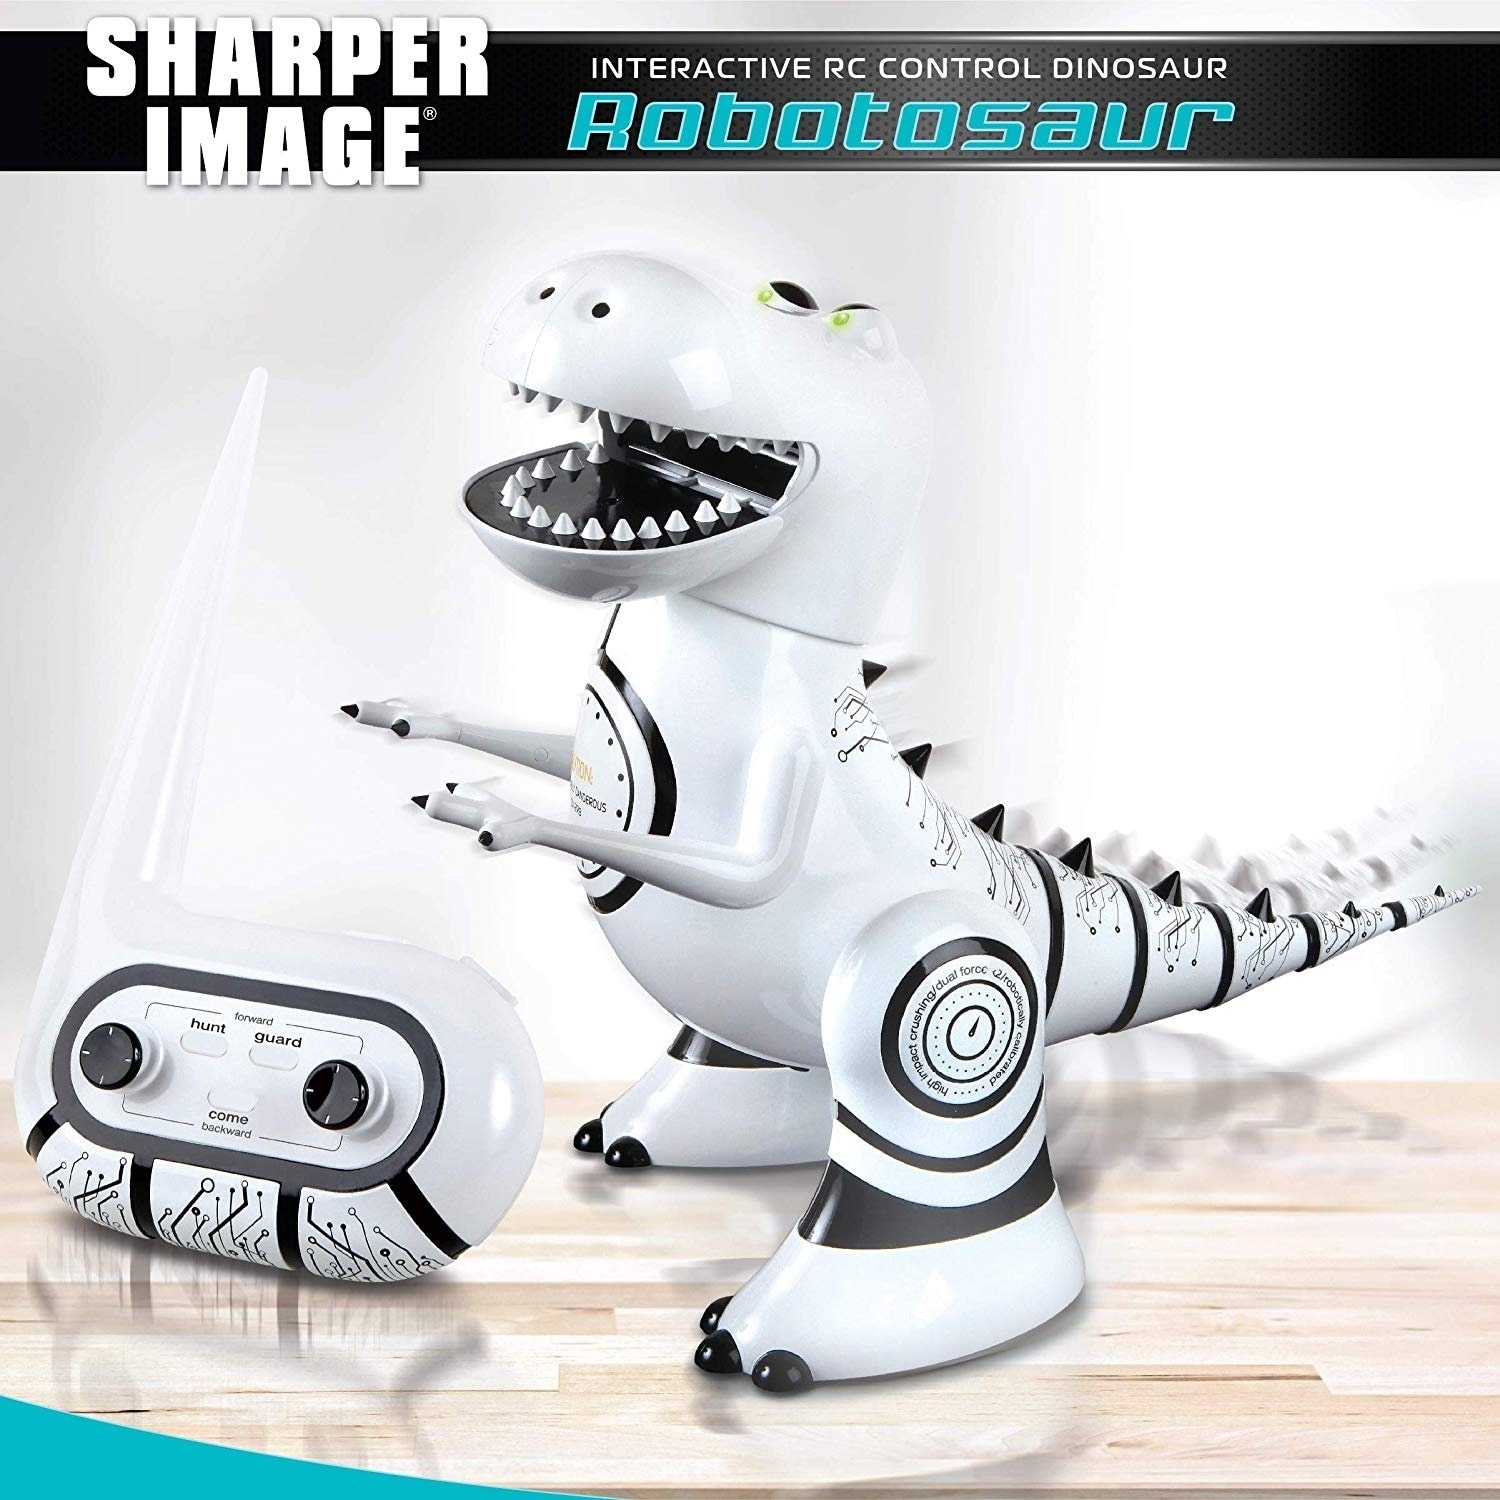 sharper image mini robot dinosaur